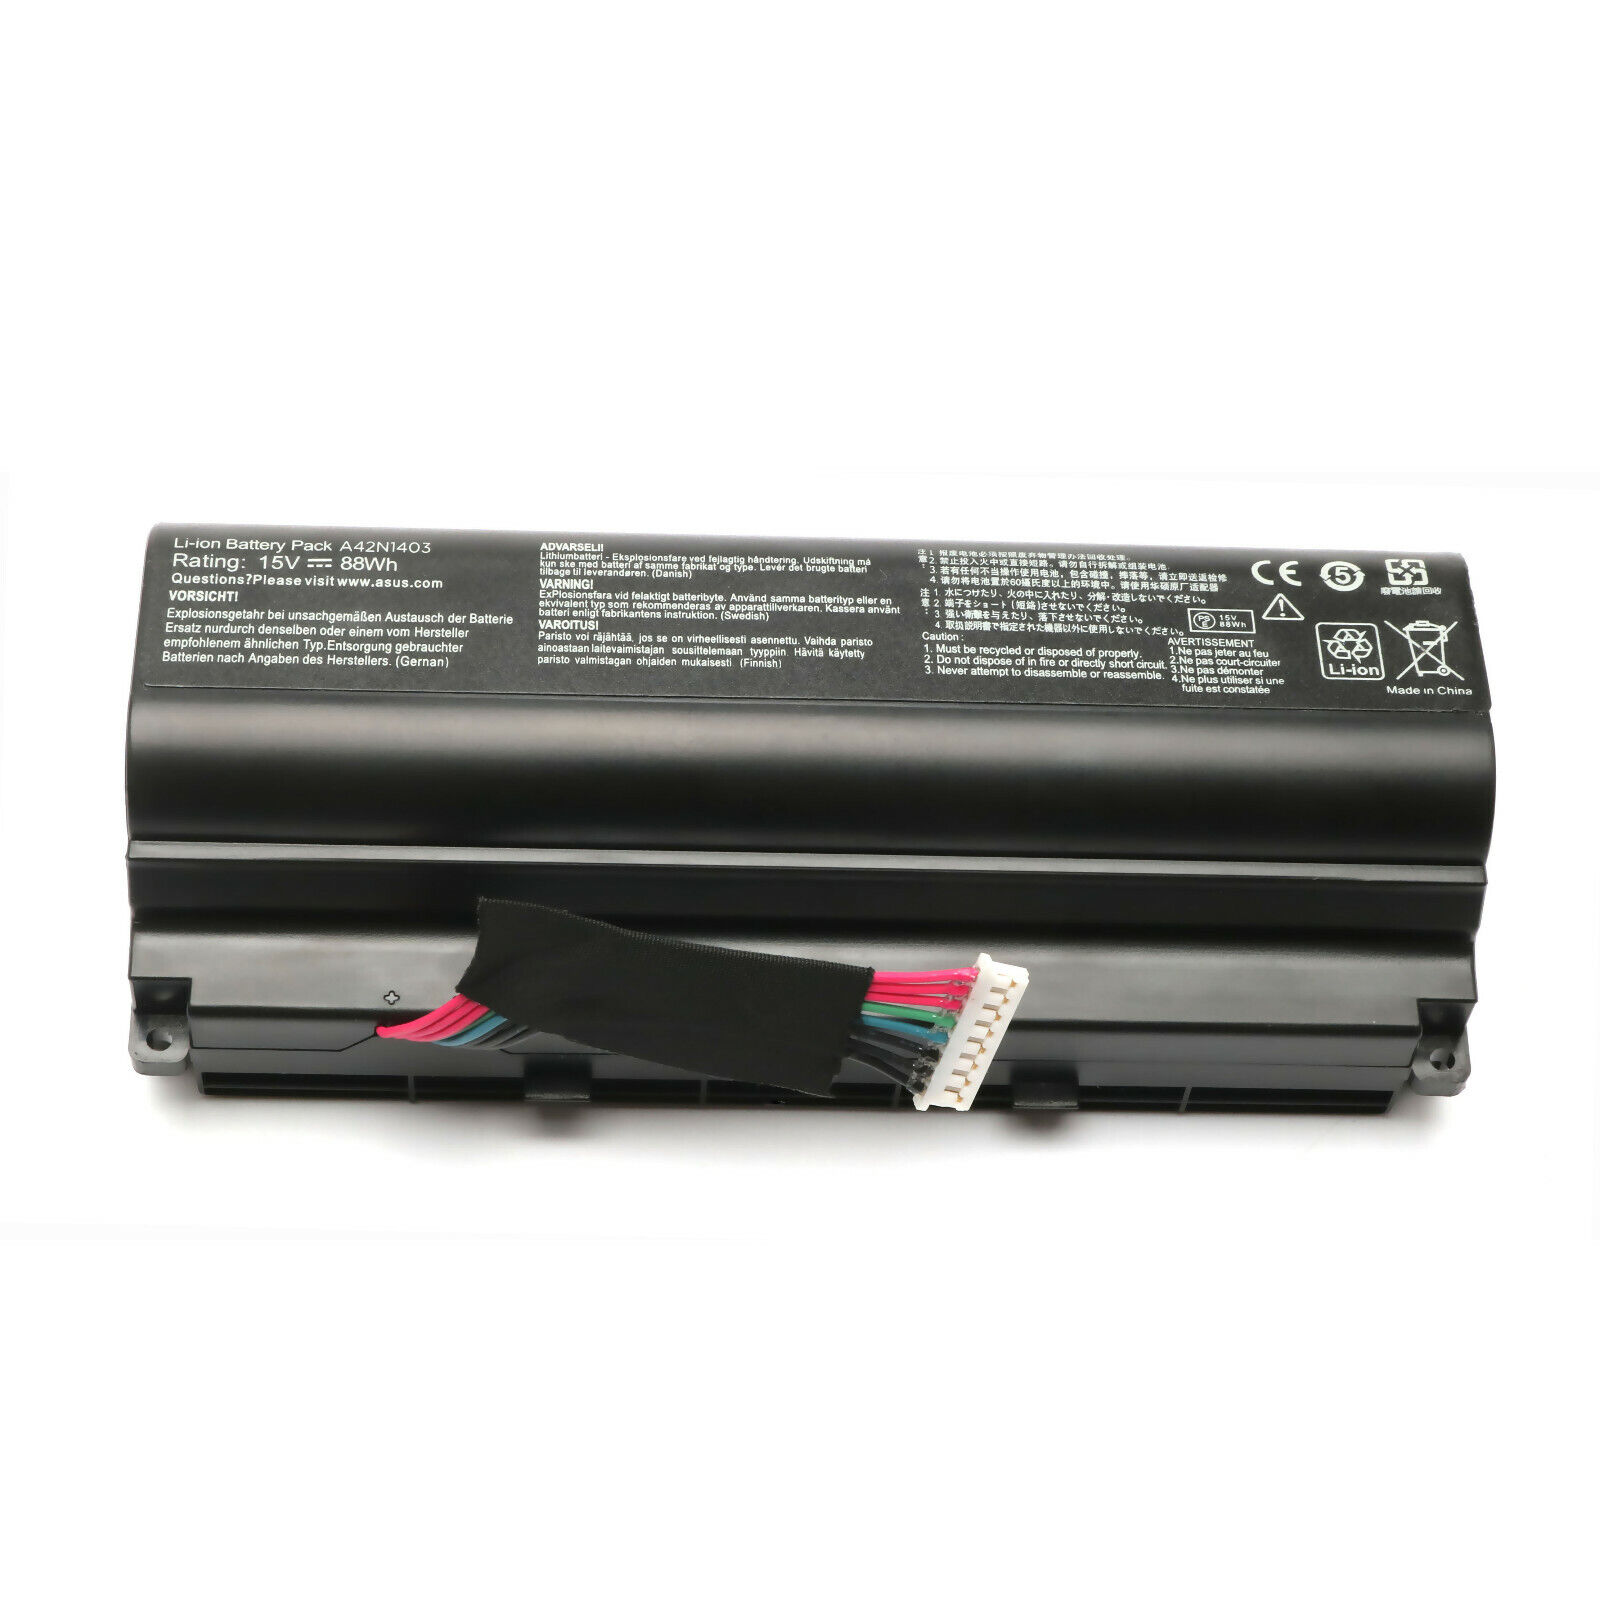  A42N1403 A42LM93 Battery for ASUS ROG G751JL G751JM G751JT GFX71JM A42LM9H NEW